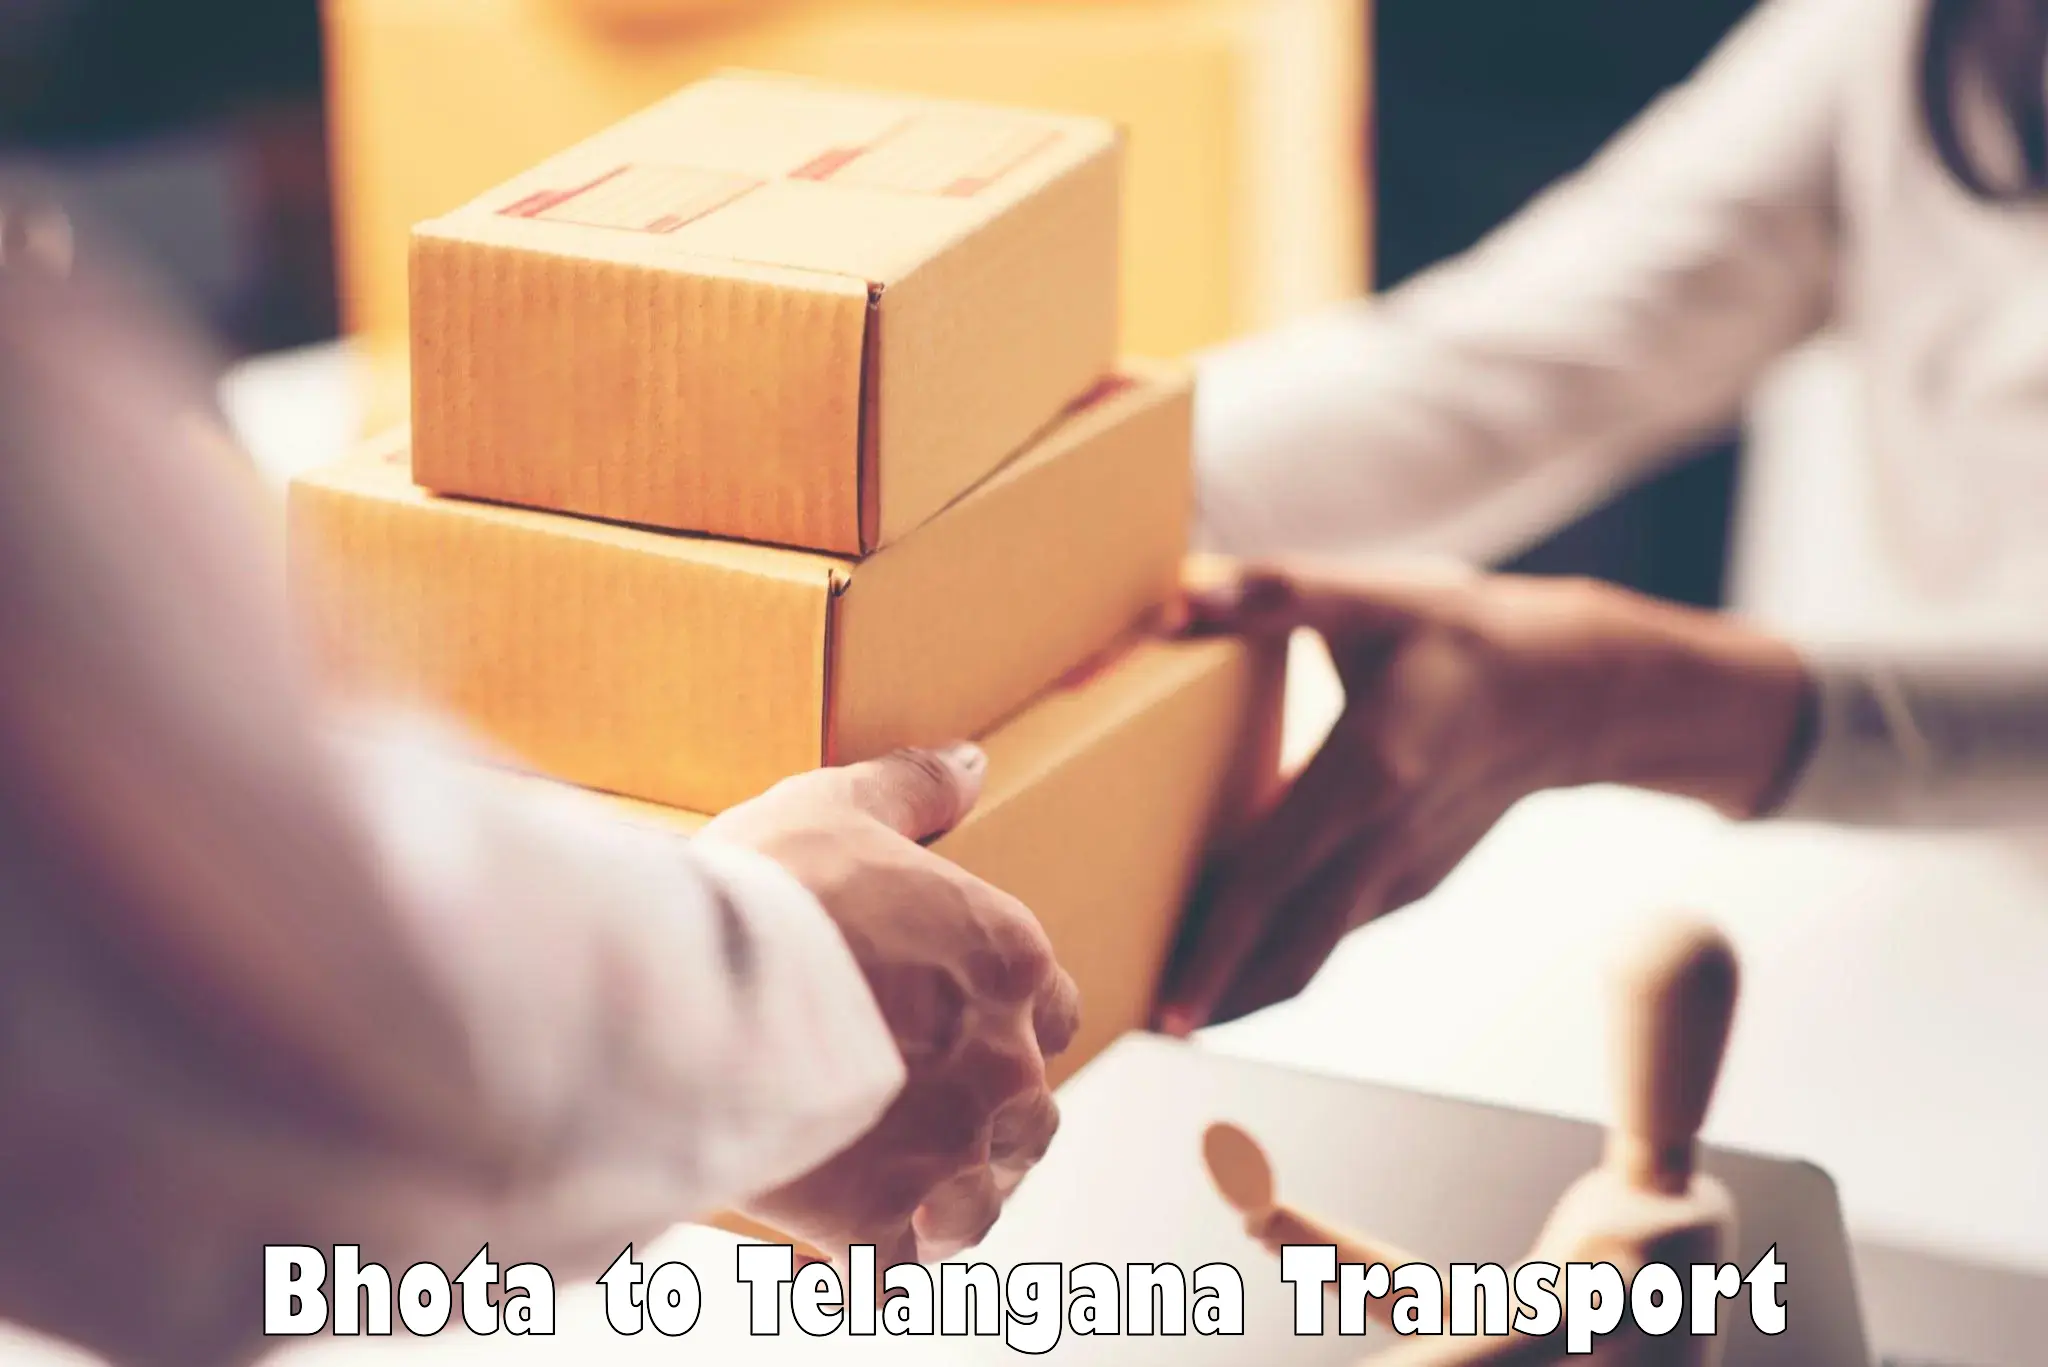 Truck transport companies in India Bhota to Kacheguda